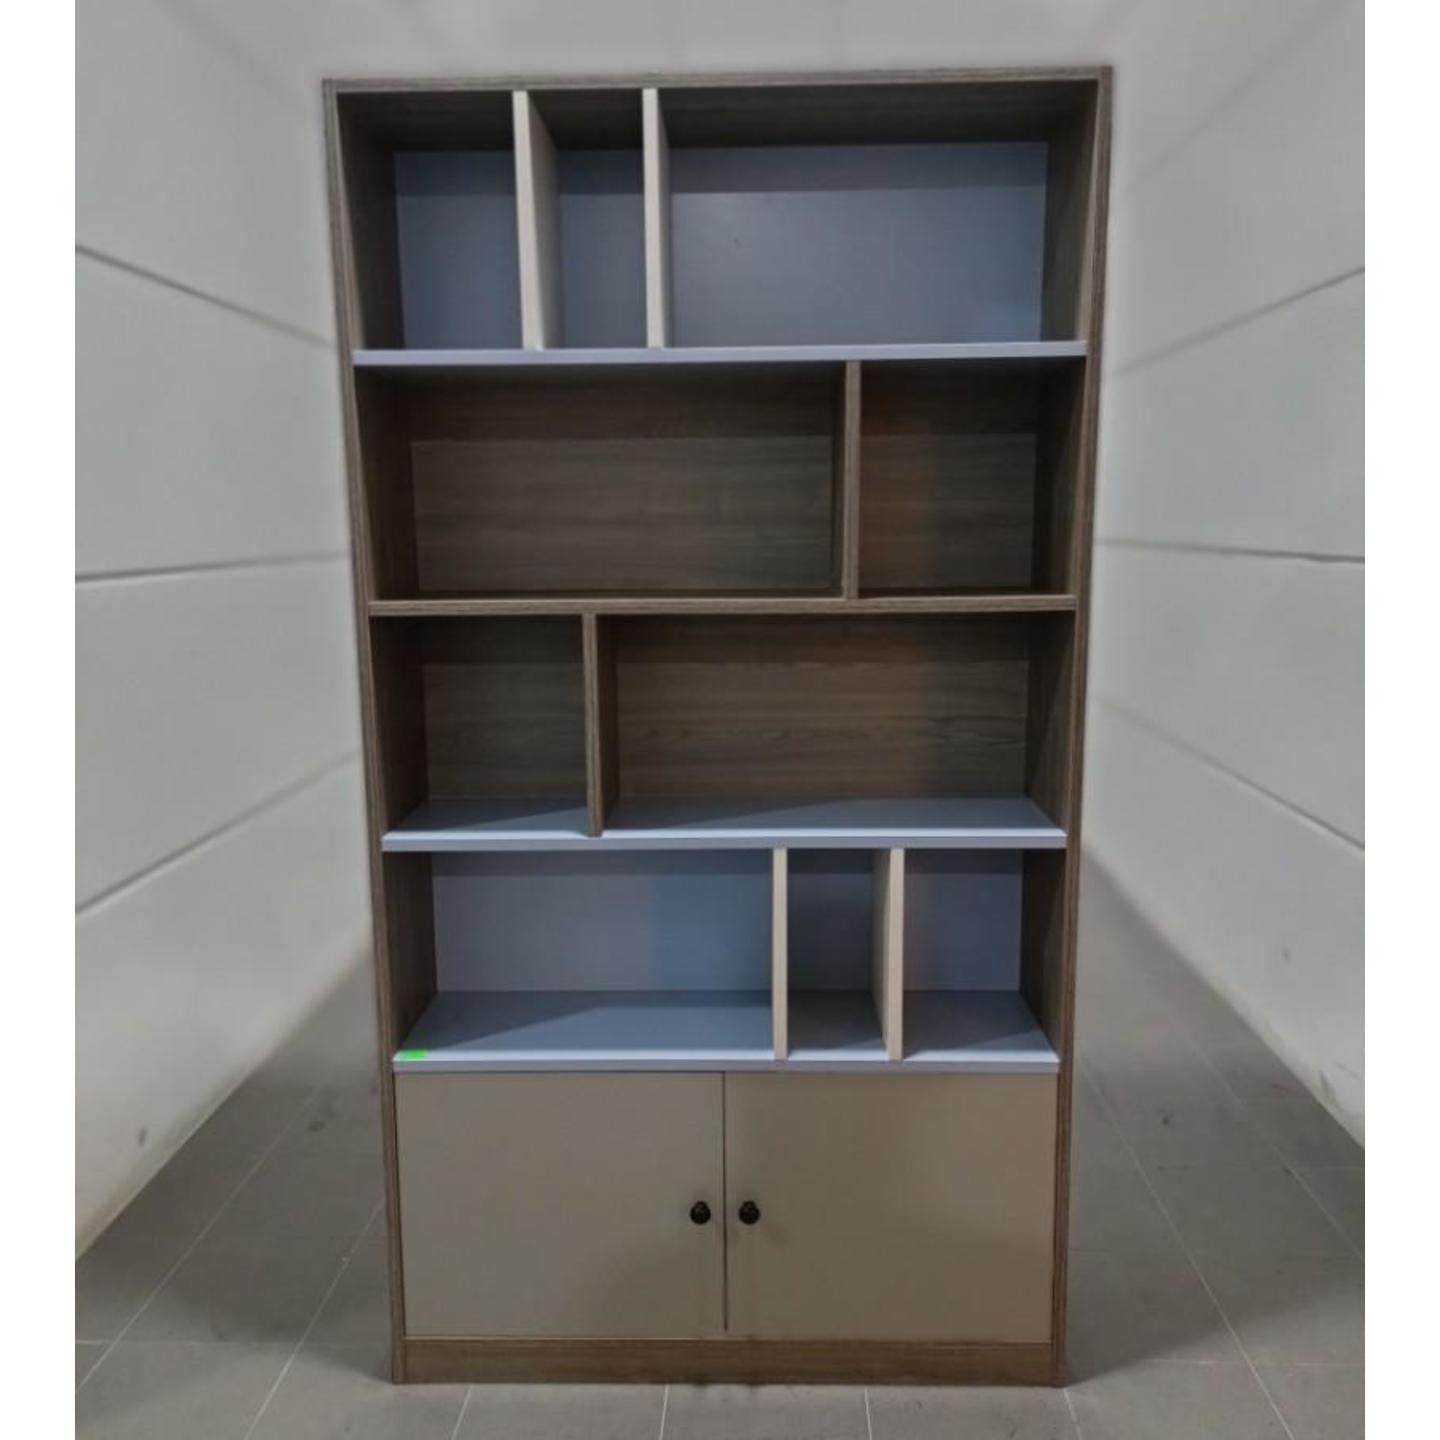 ARKONA Display Cabinet in WALNUT & BLUE